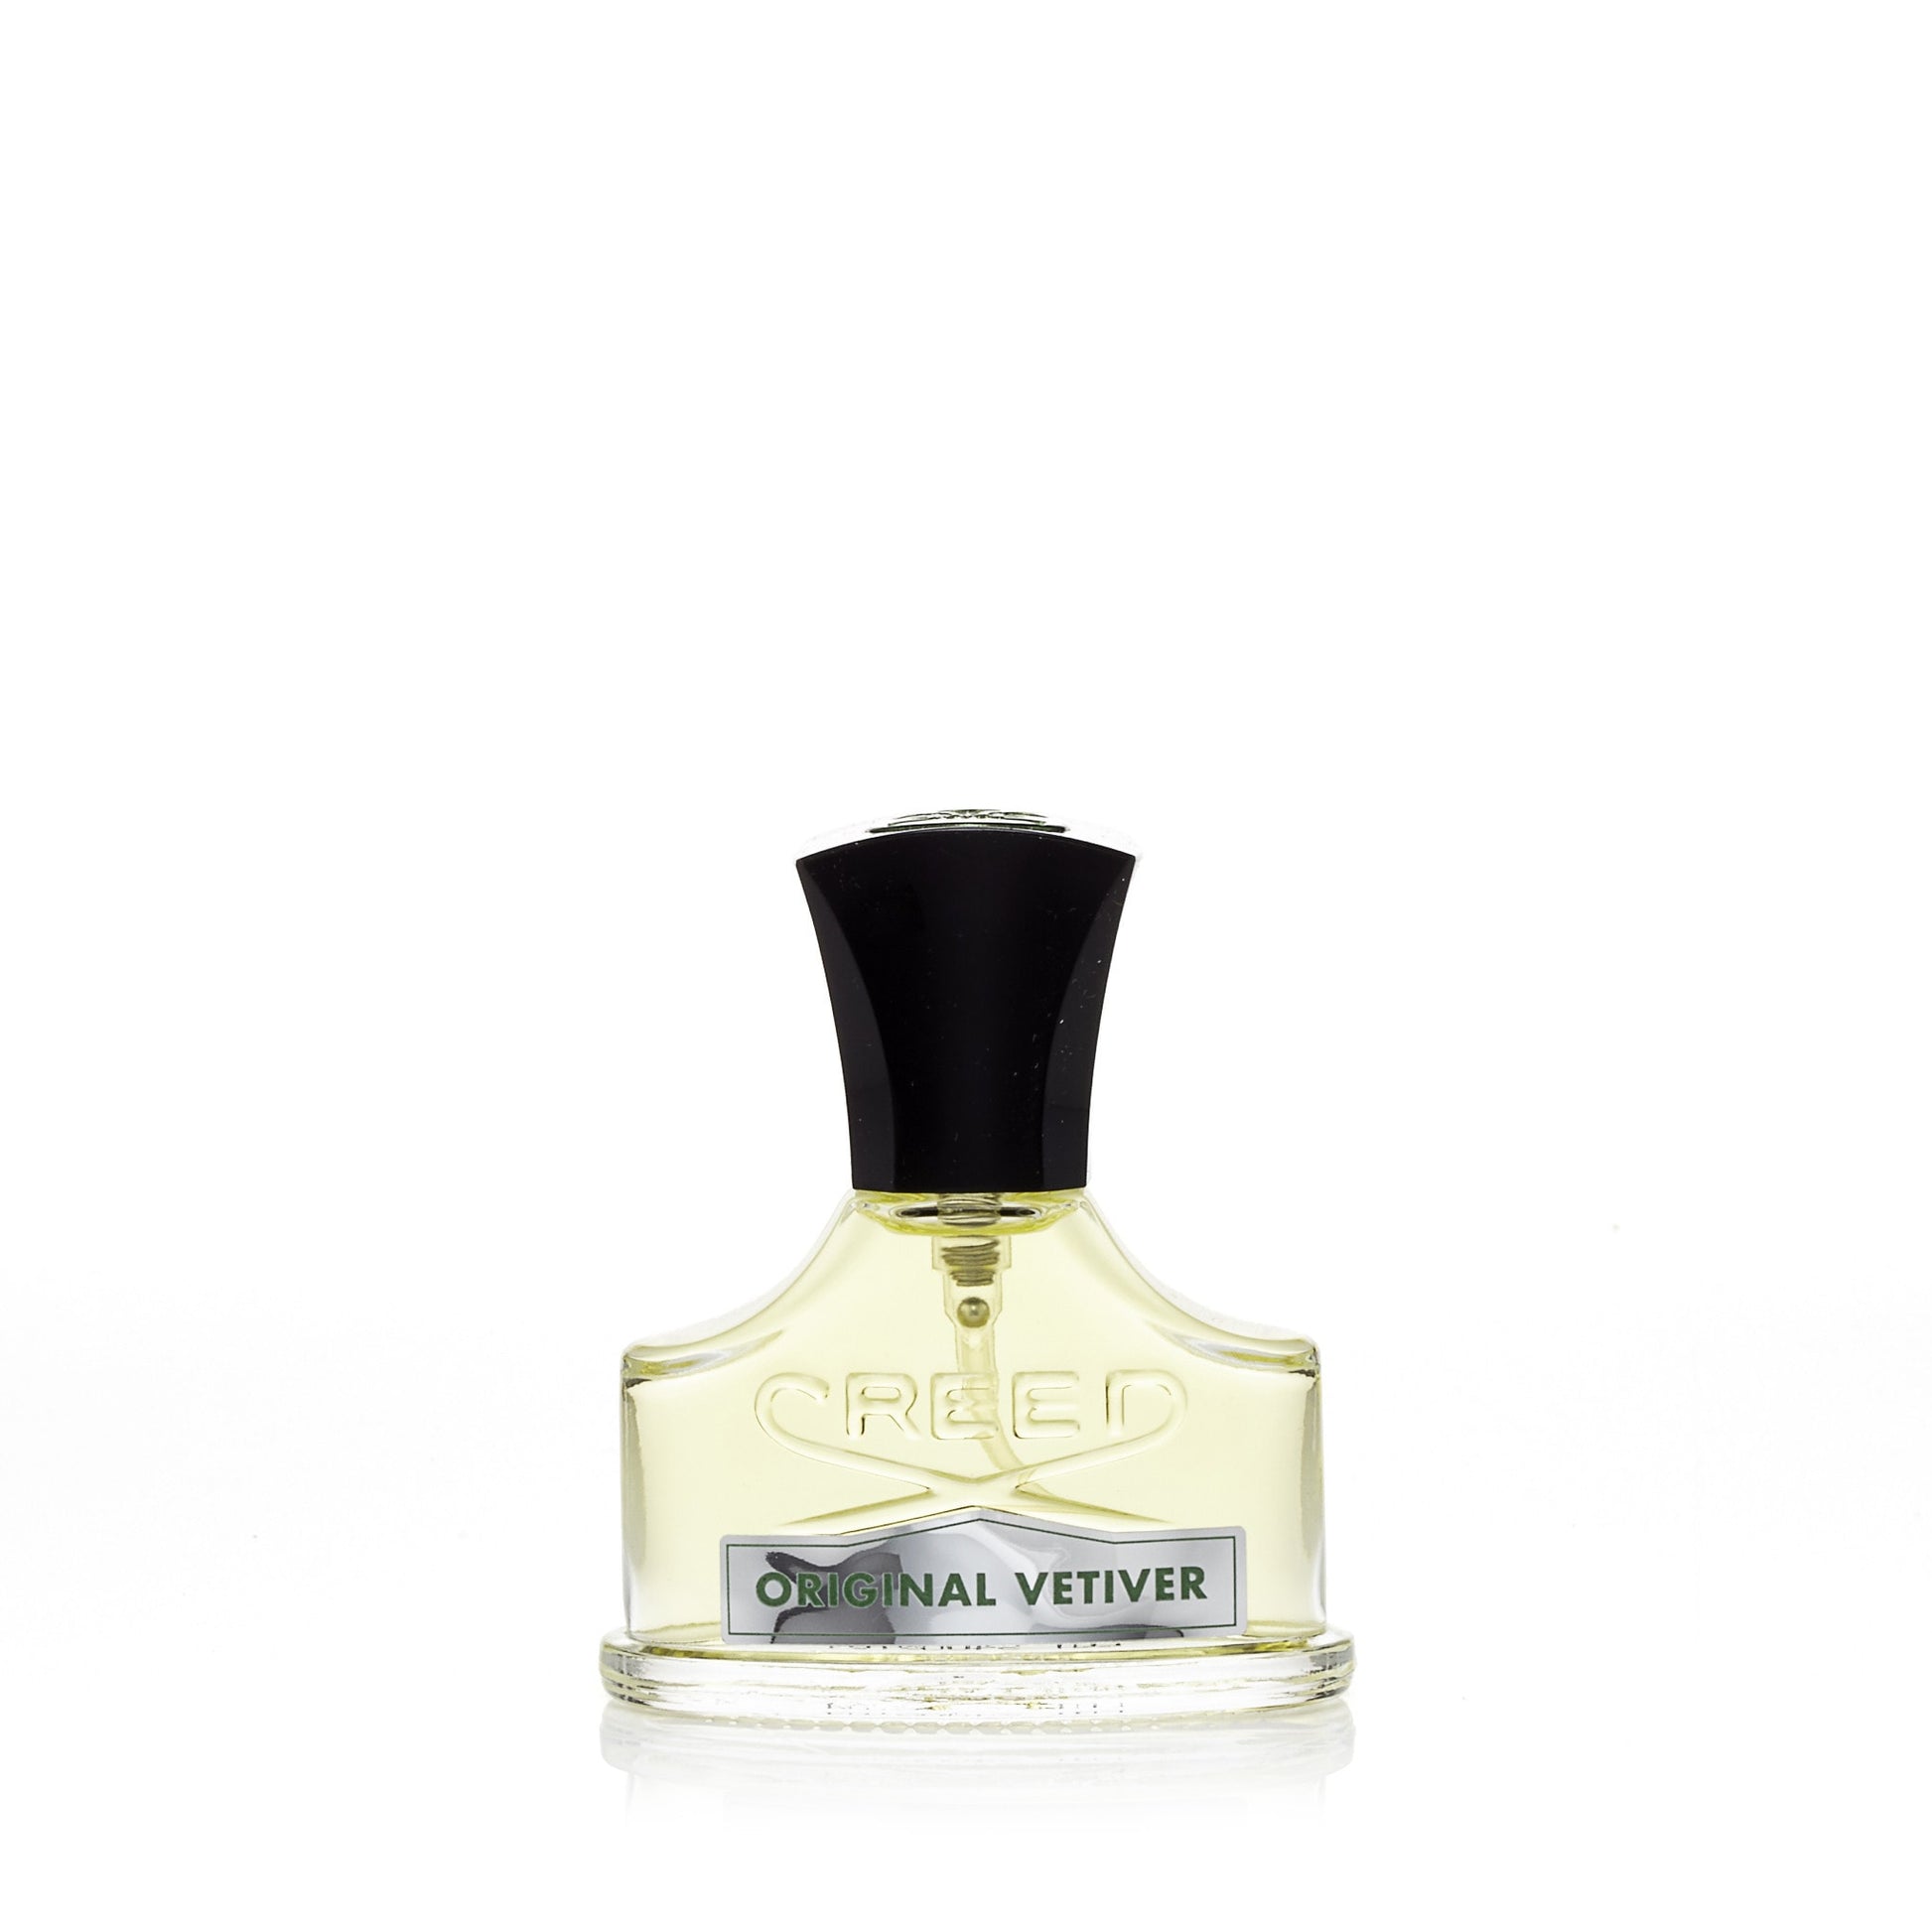 Original Vetiver Eau de Parfum Spray for Men by Creed, Product image 3